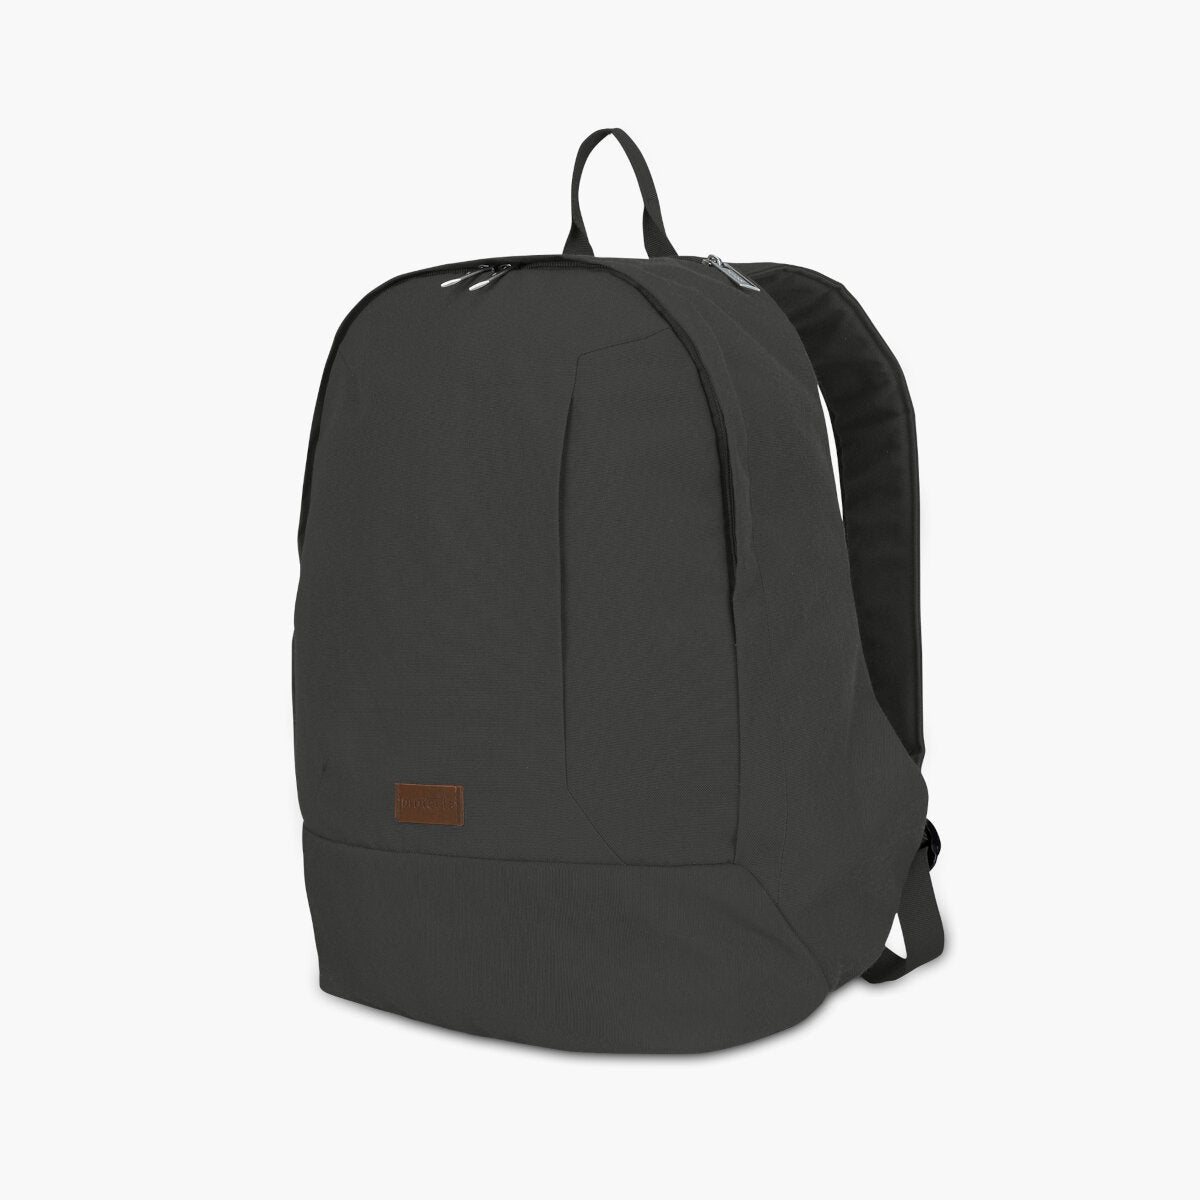 Green | Protecta Steady Progress Laptop Backpack - 2